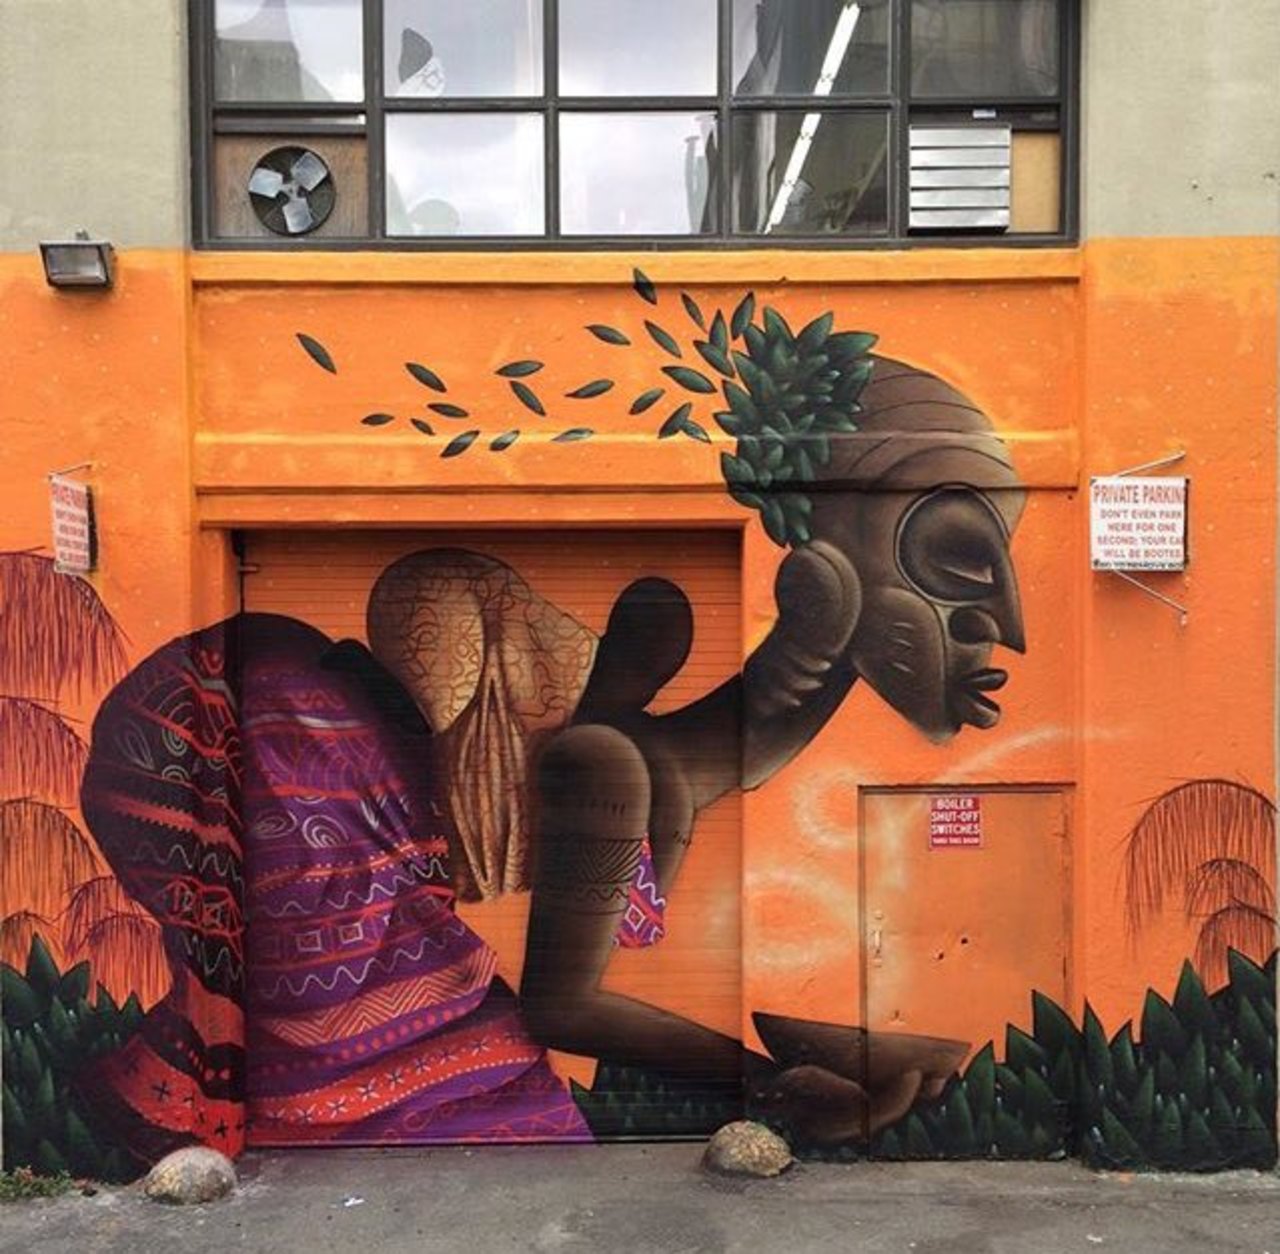 New Street Art by Alexandre Keto in NYC 

#art #graffiti #mural #streetart https://t.co/ATxIwlJlug